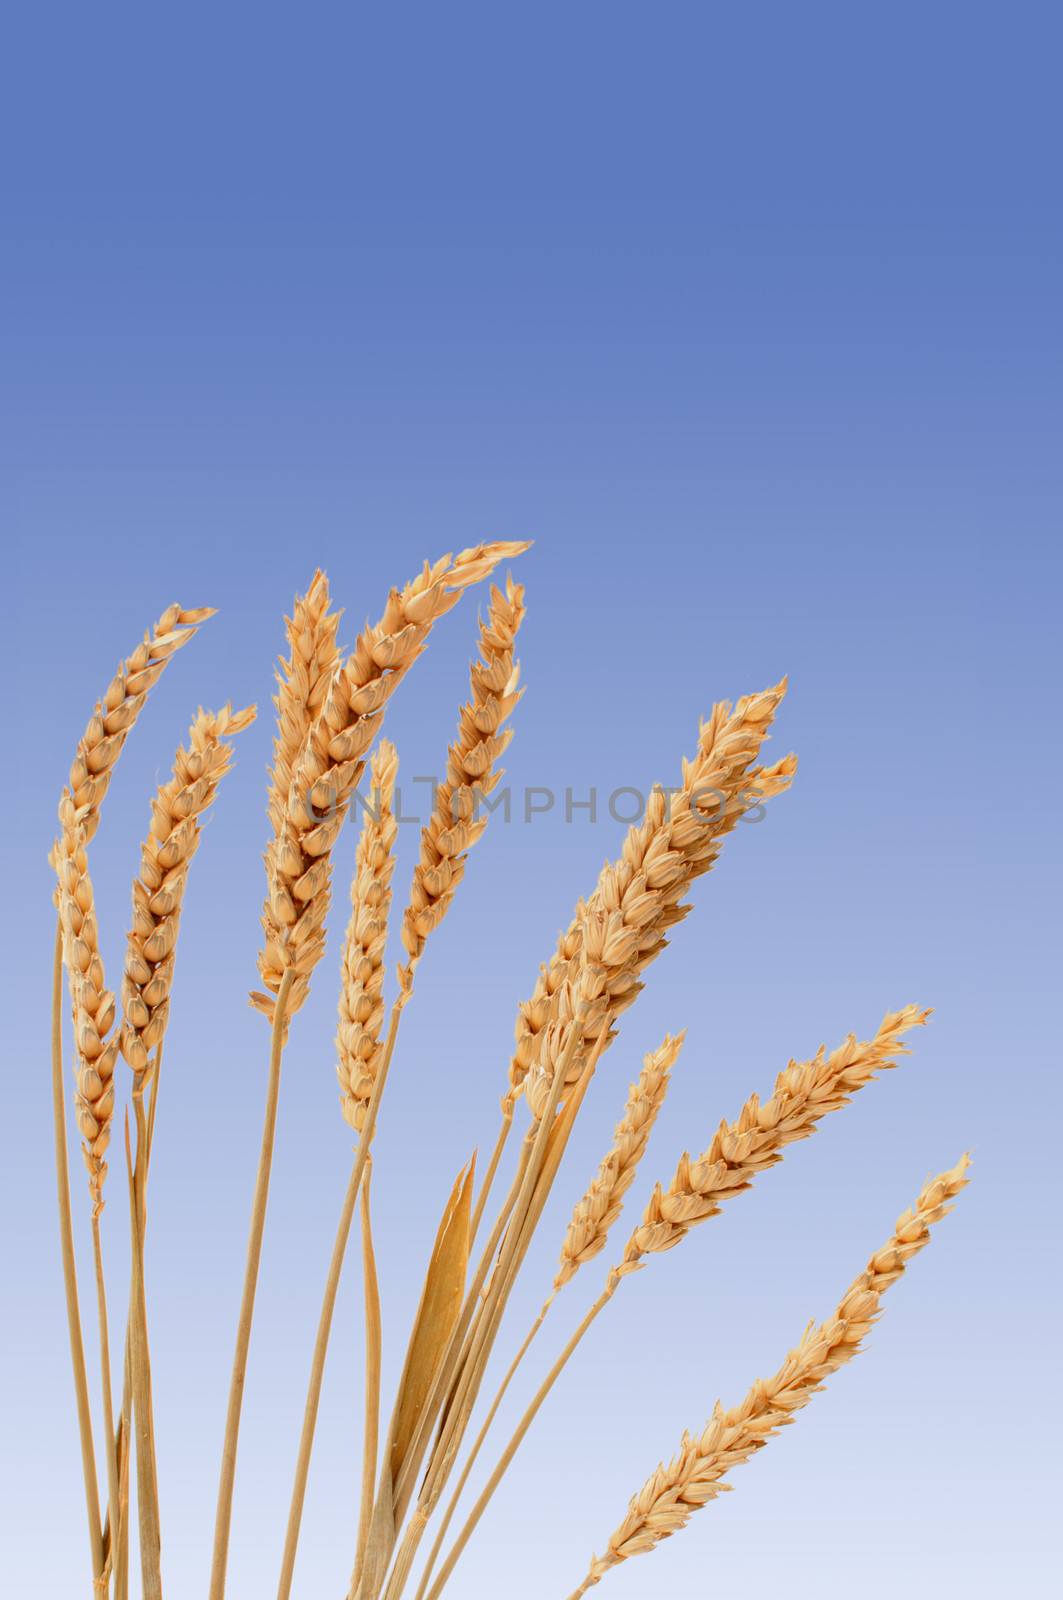 Closeup of wheat crop against a blue sky